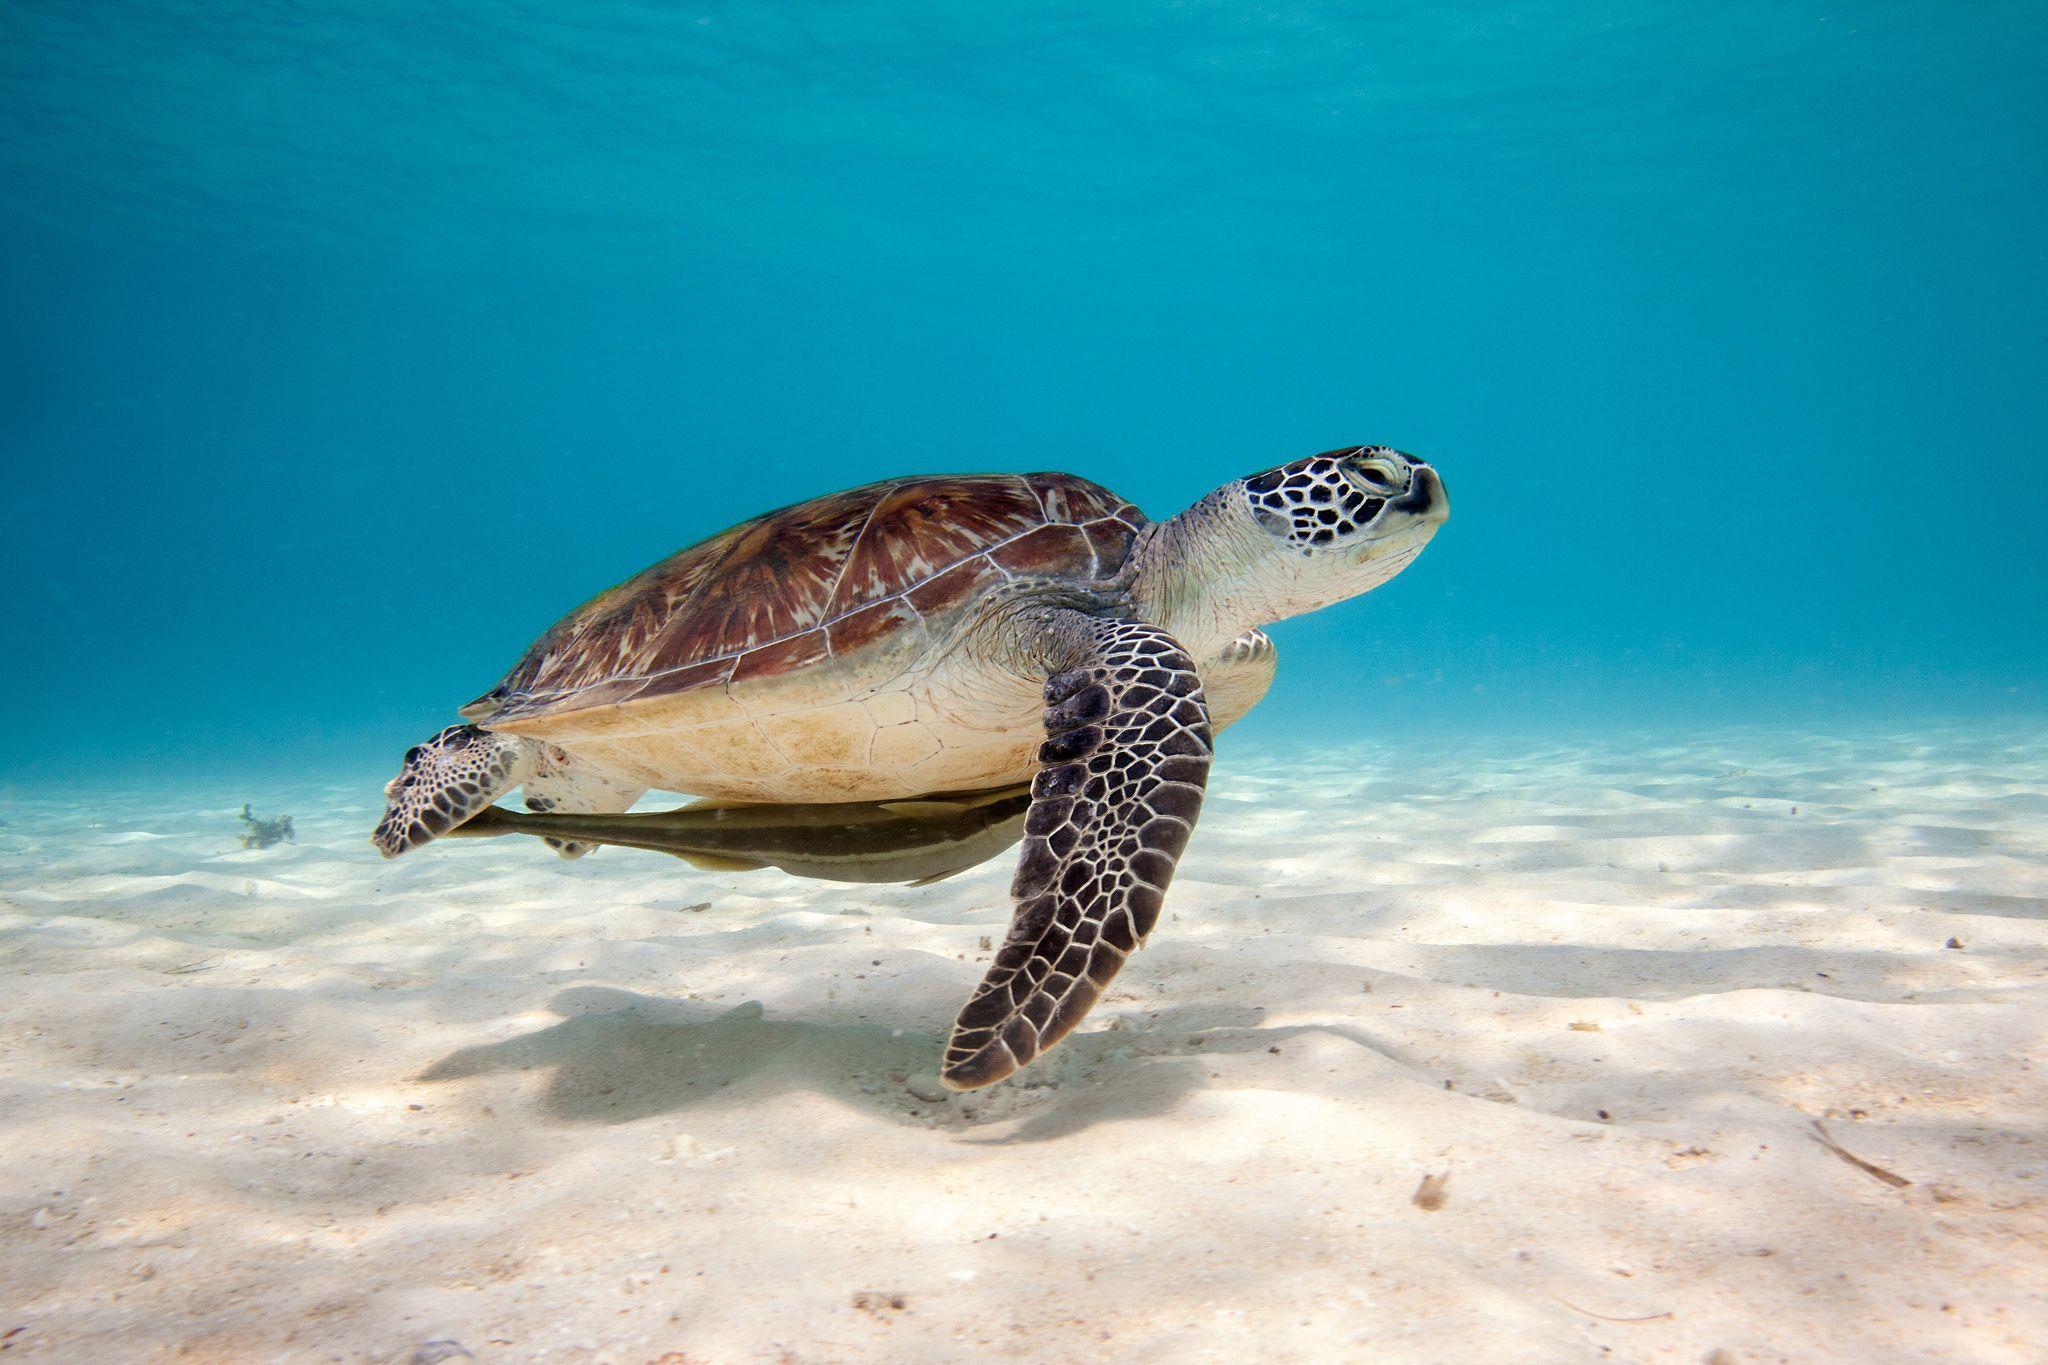 Turtle underwater HD Wallpaper Picture Photo Image. Sea turtle